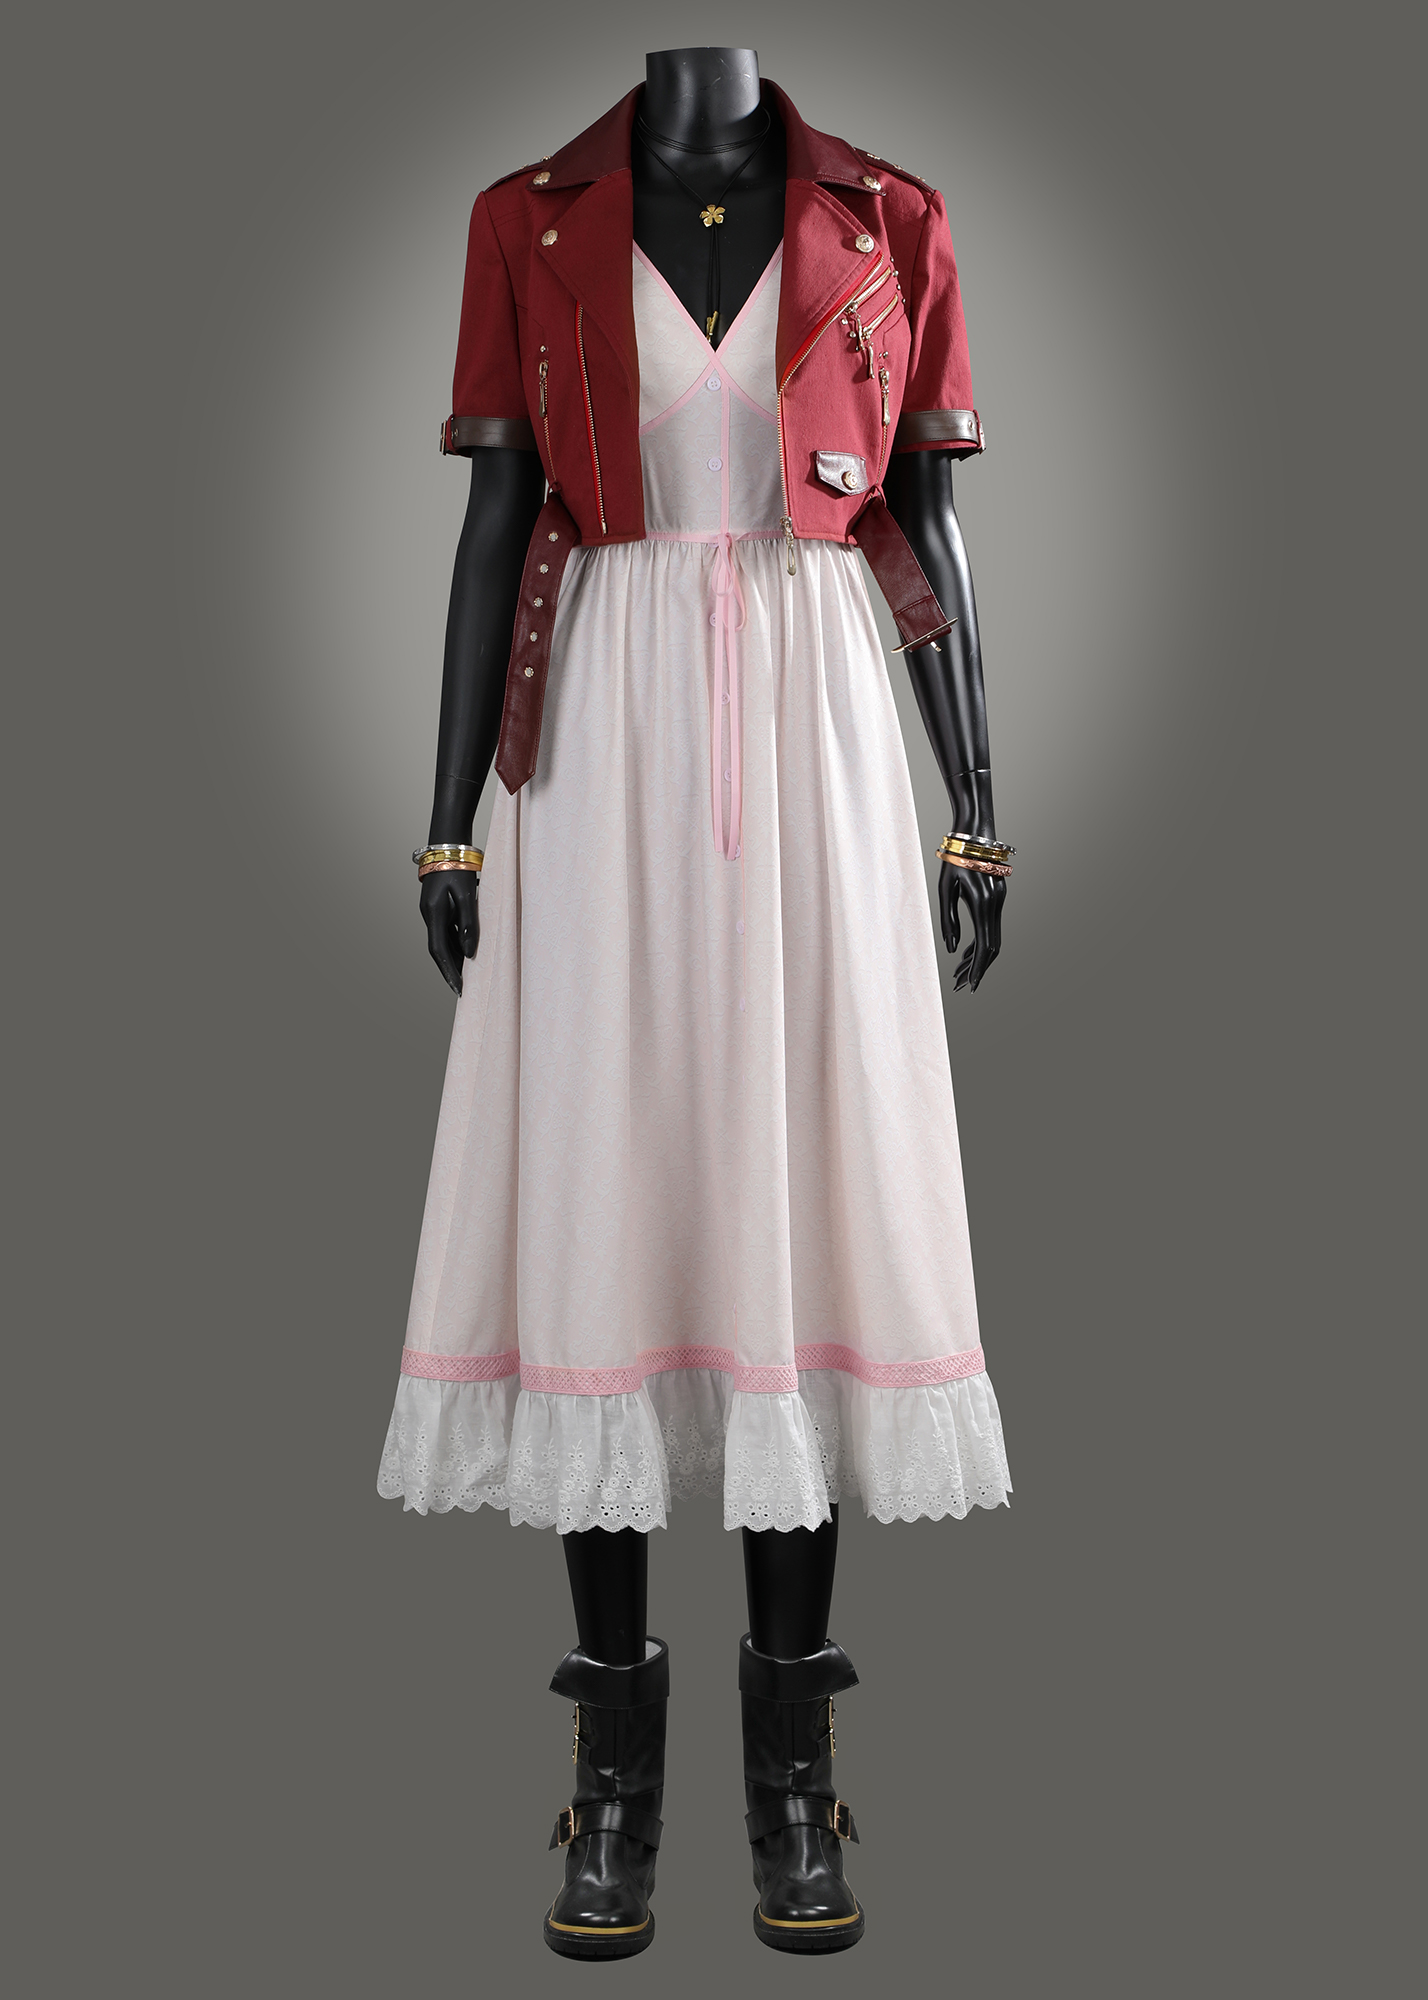 Aerith Gainsborough Costume Final Fantasy VII Rebirth Suit Cosplay